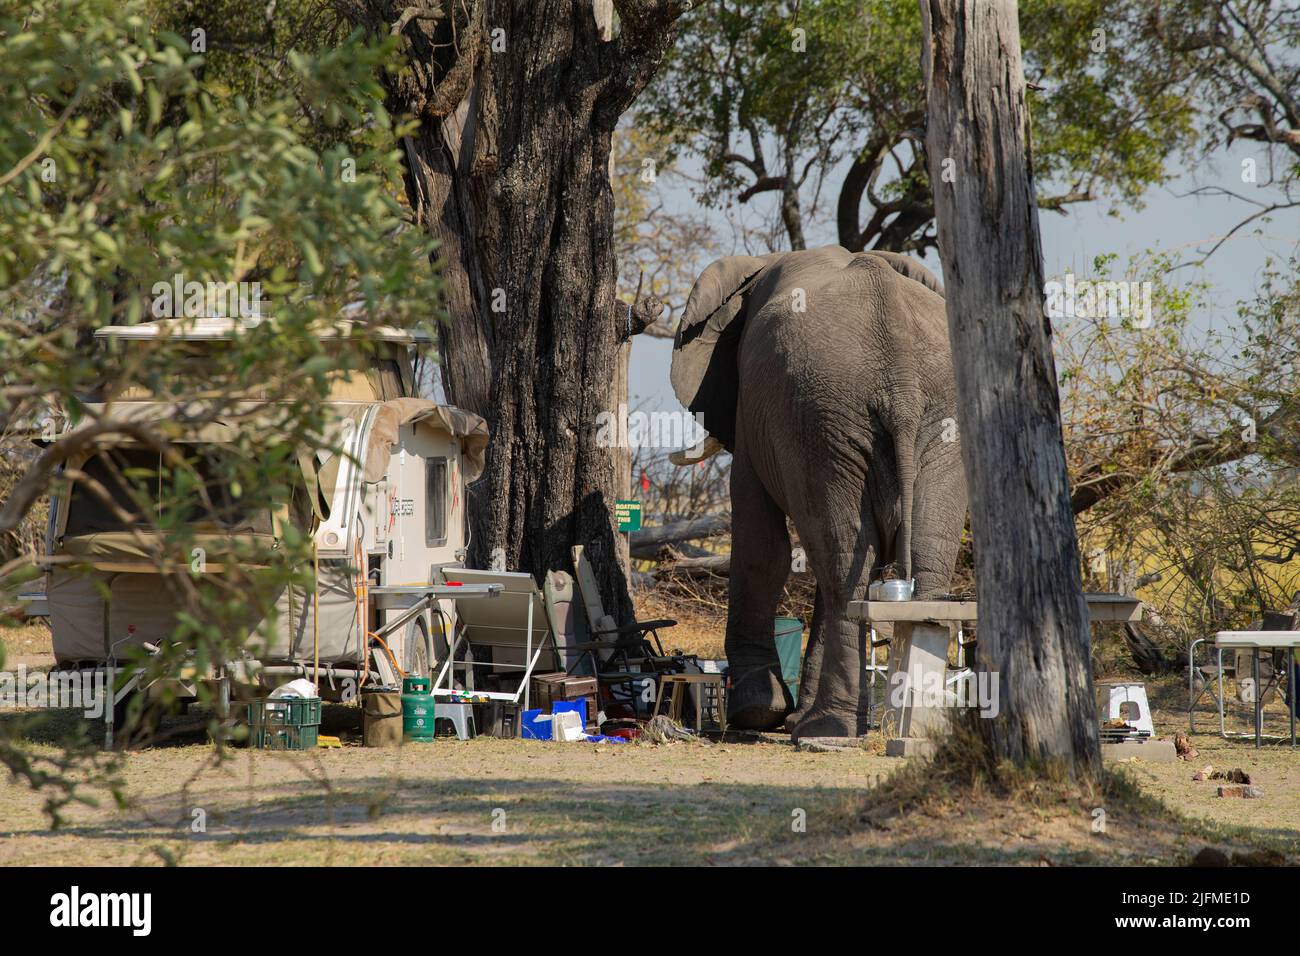 African Elephant (Loxodonta africana) disturbing a tourist campsite Stock Photo